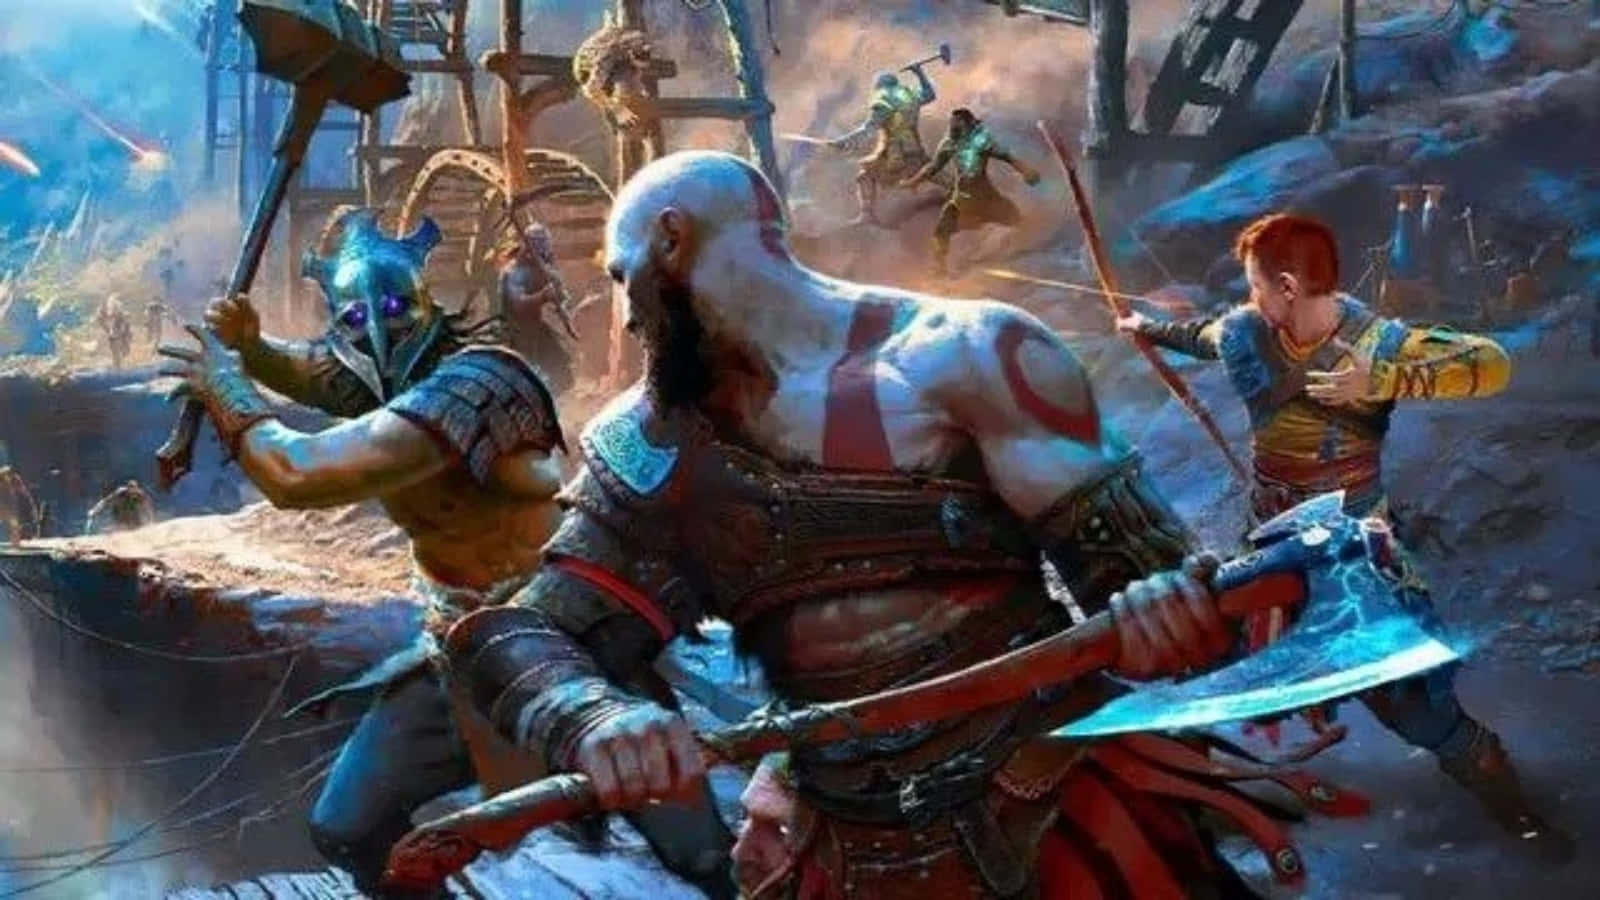 Epic God of War Characters Battle Scene Wallpaper